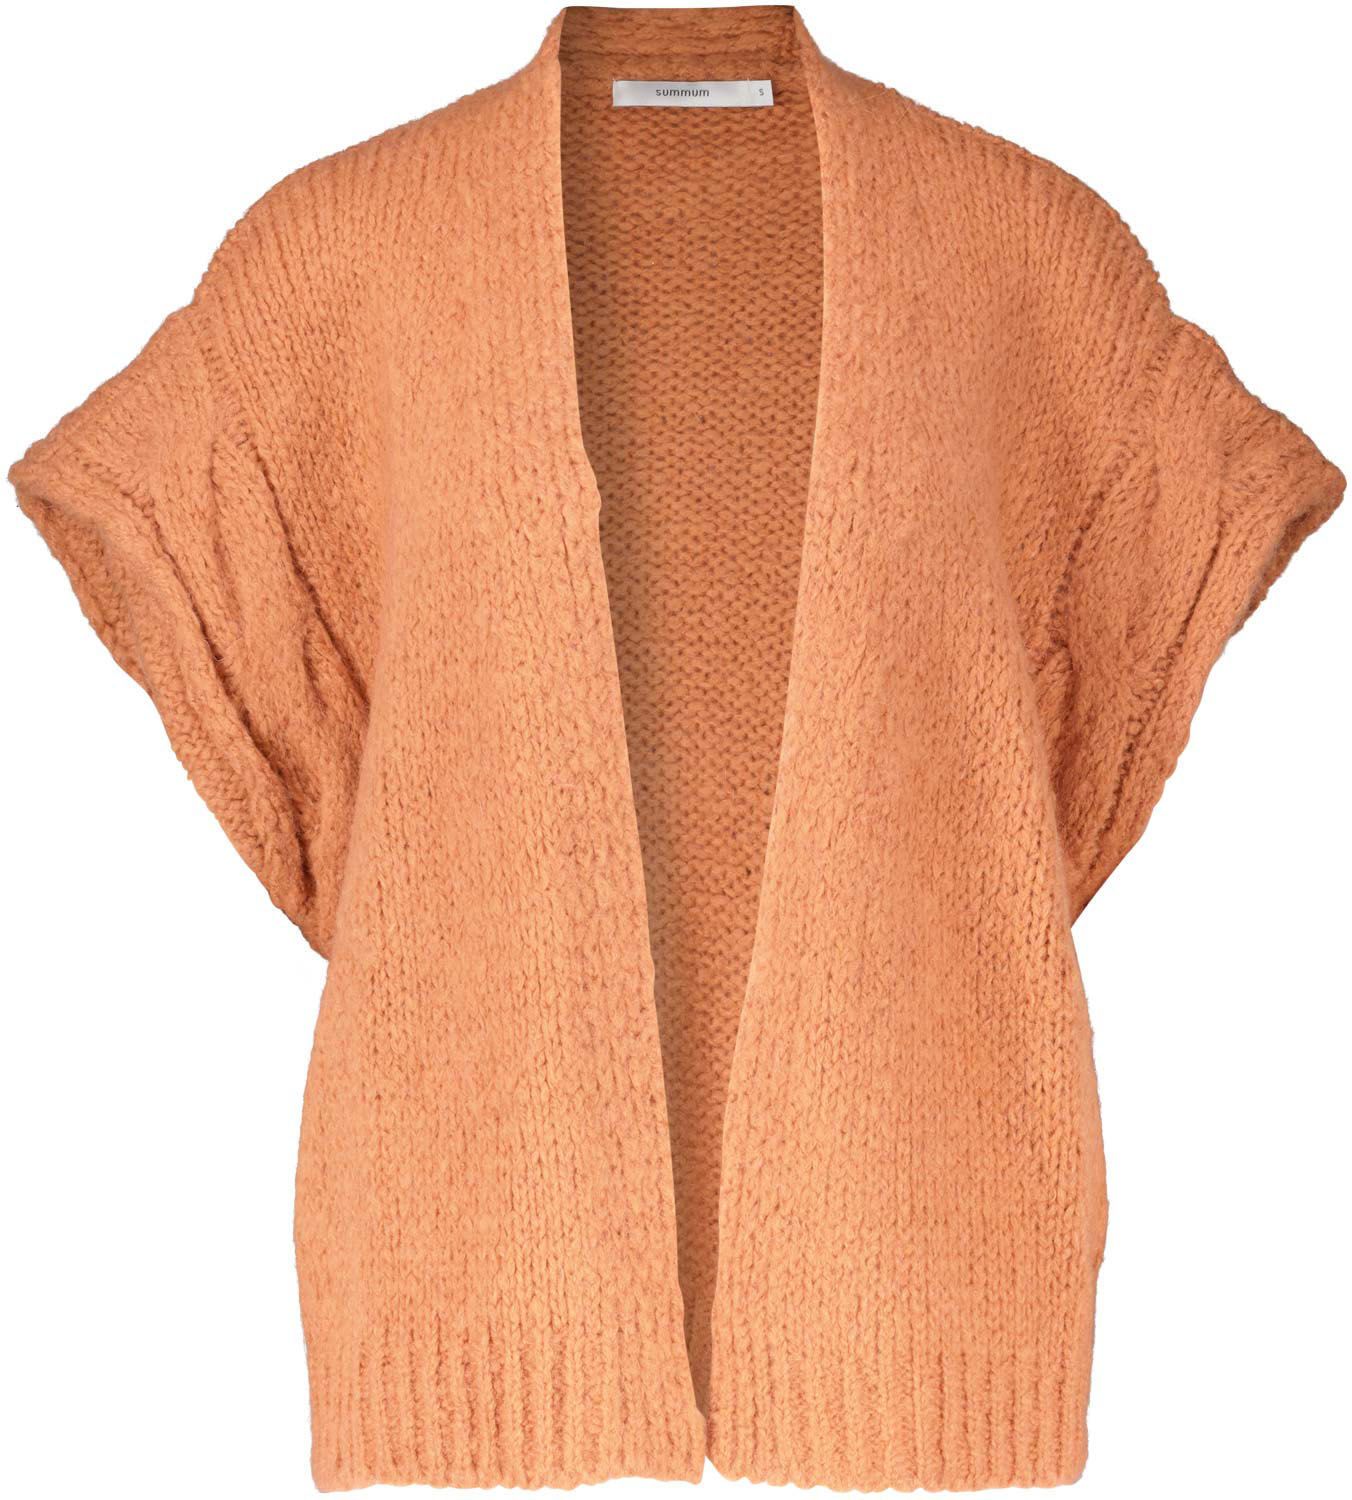 Sleeveless cardigan Rustic mohair blend knit Roze